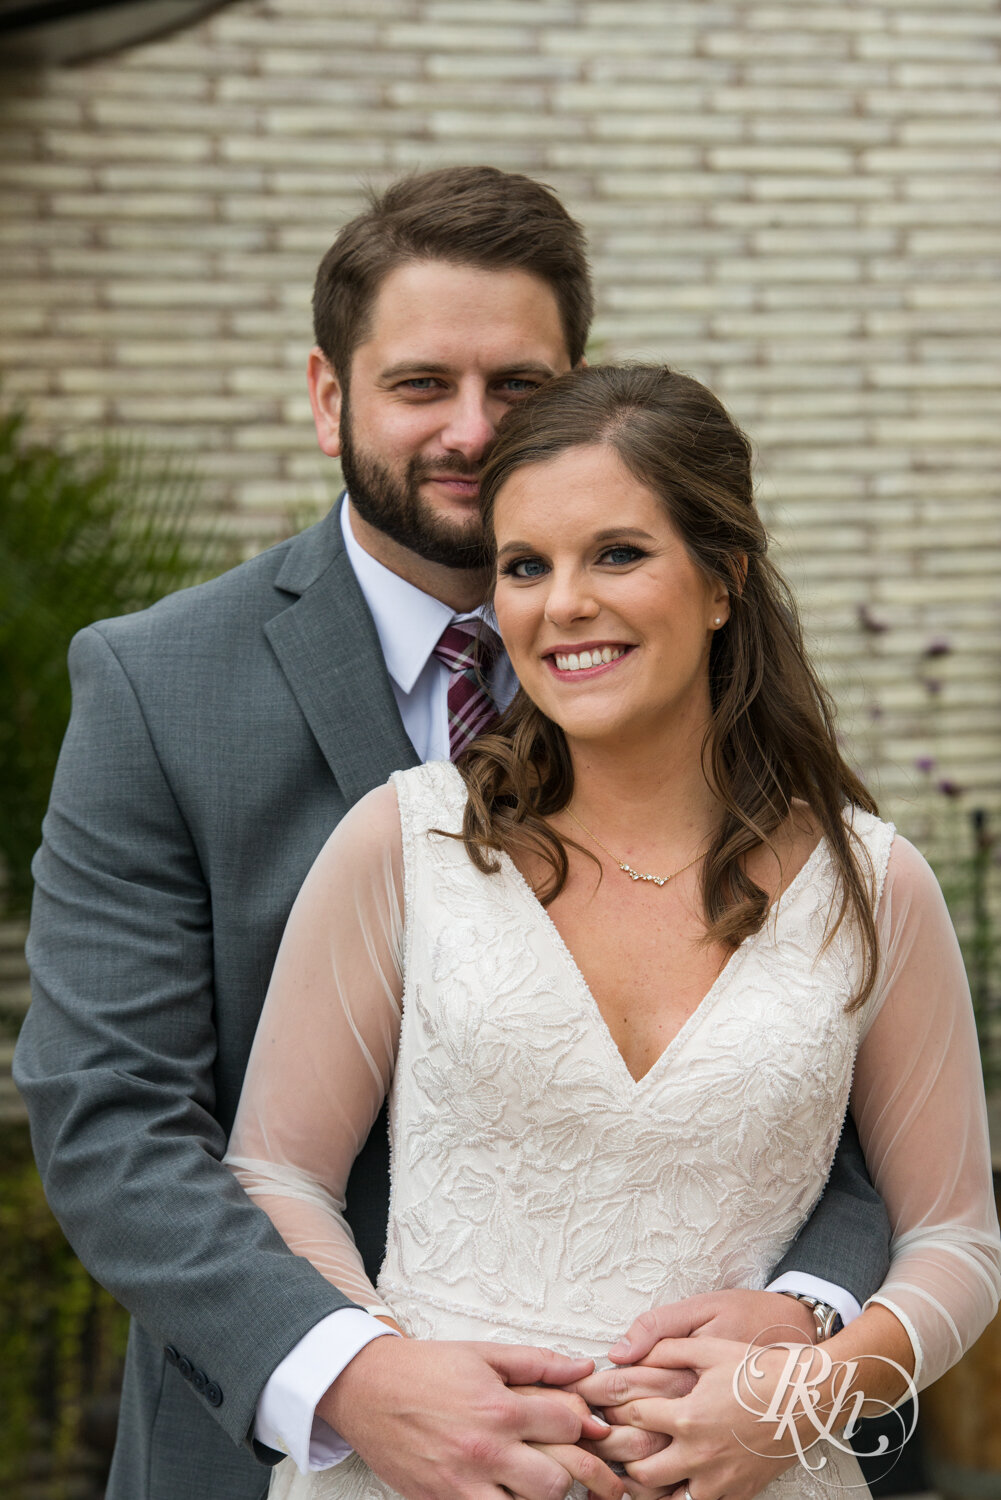 Bride and groom smile on wedding day at Kellerman's Event Center in White Bear Lake, Minnesota.